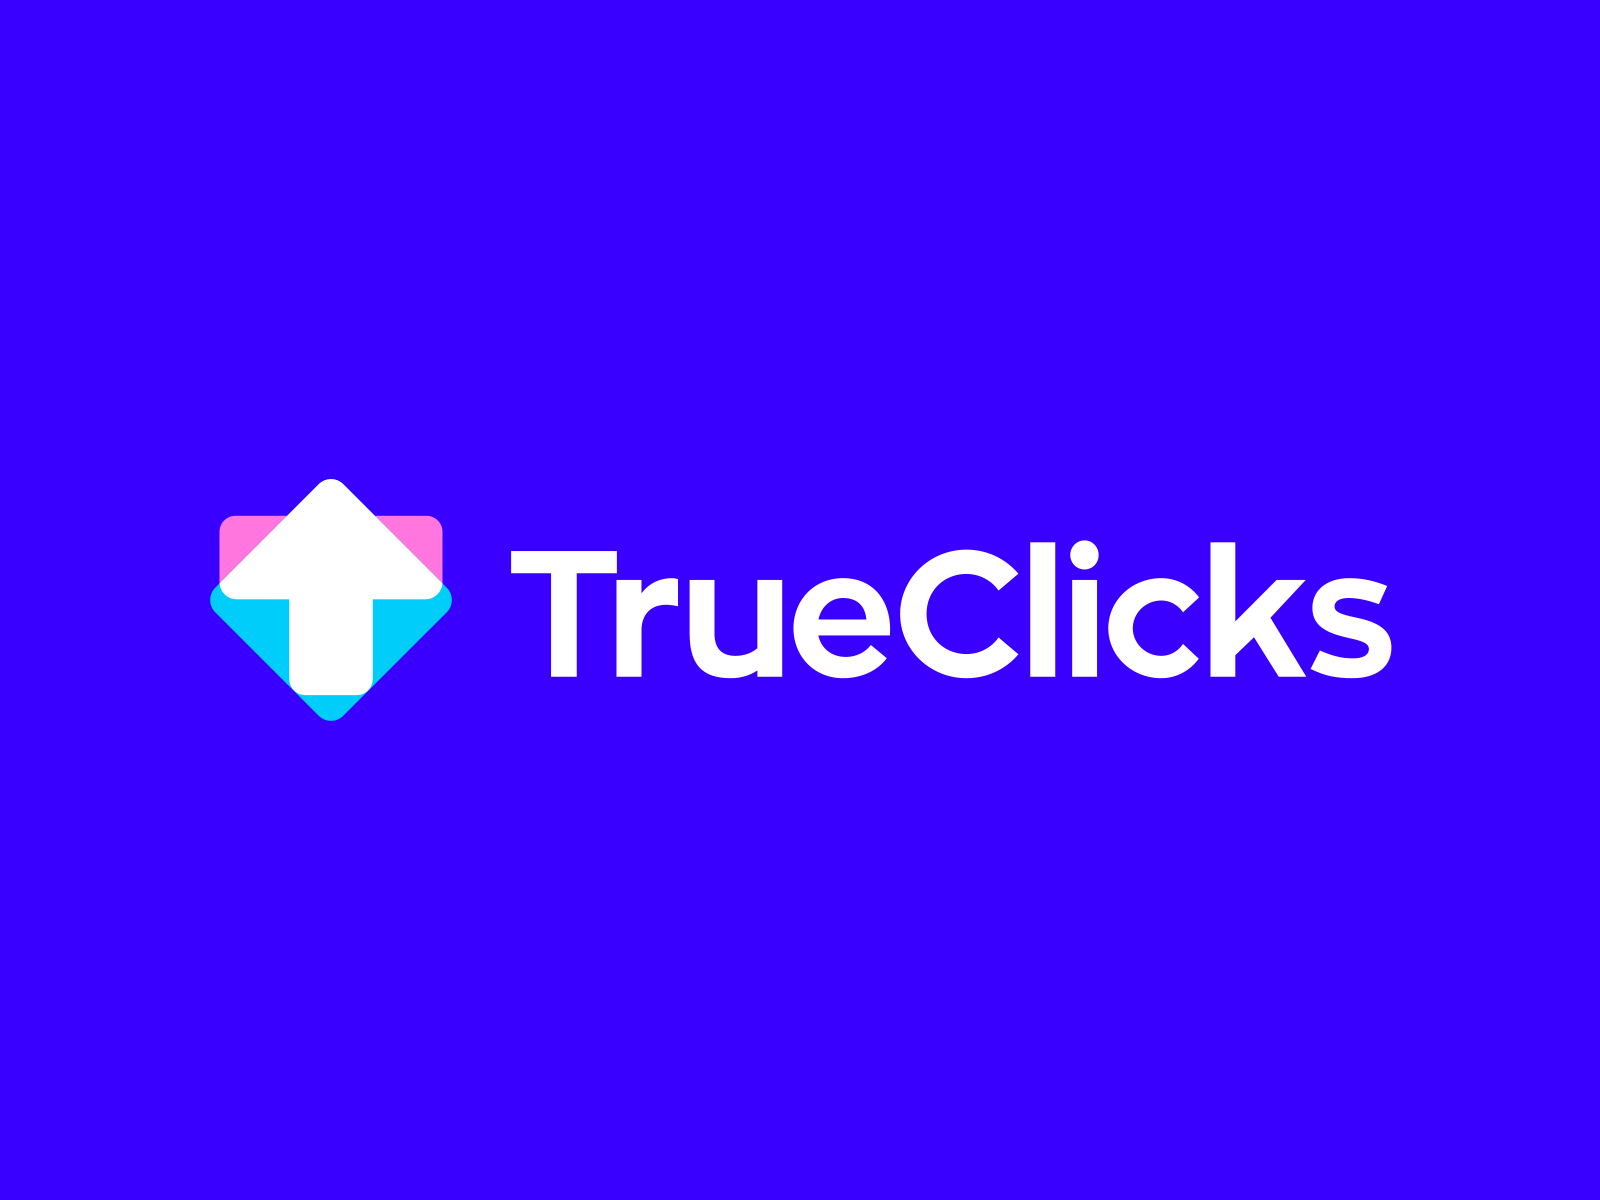 TrueClicks logo animation animation branding carazan vadim arrow growth click clicks web online client transparent t monogram consulting support help consult logo design logos mark truth true brand branding